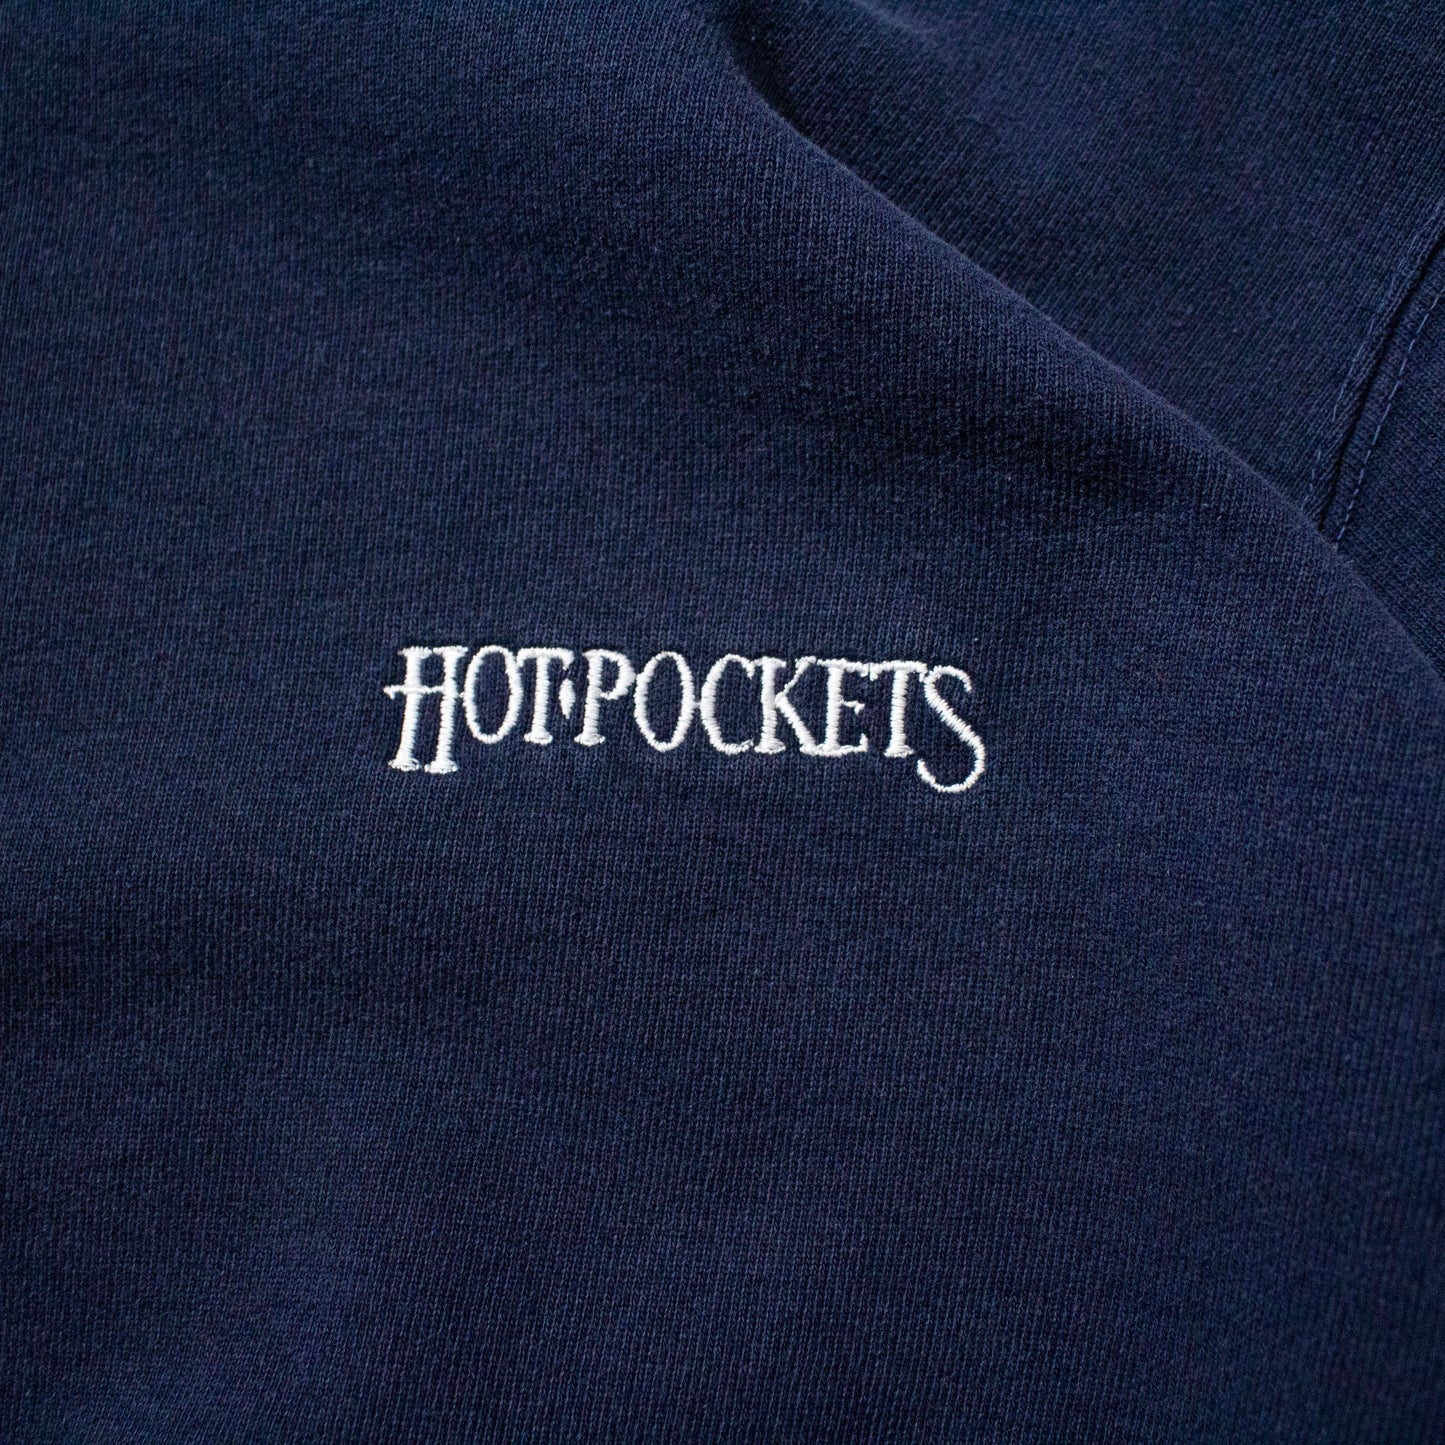 Hot Pockets Crewneck Sweat Made in U.S.A.